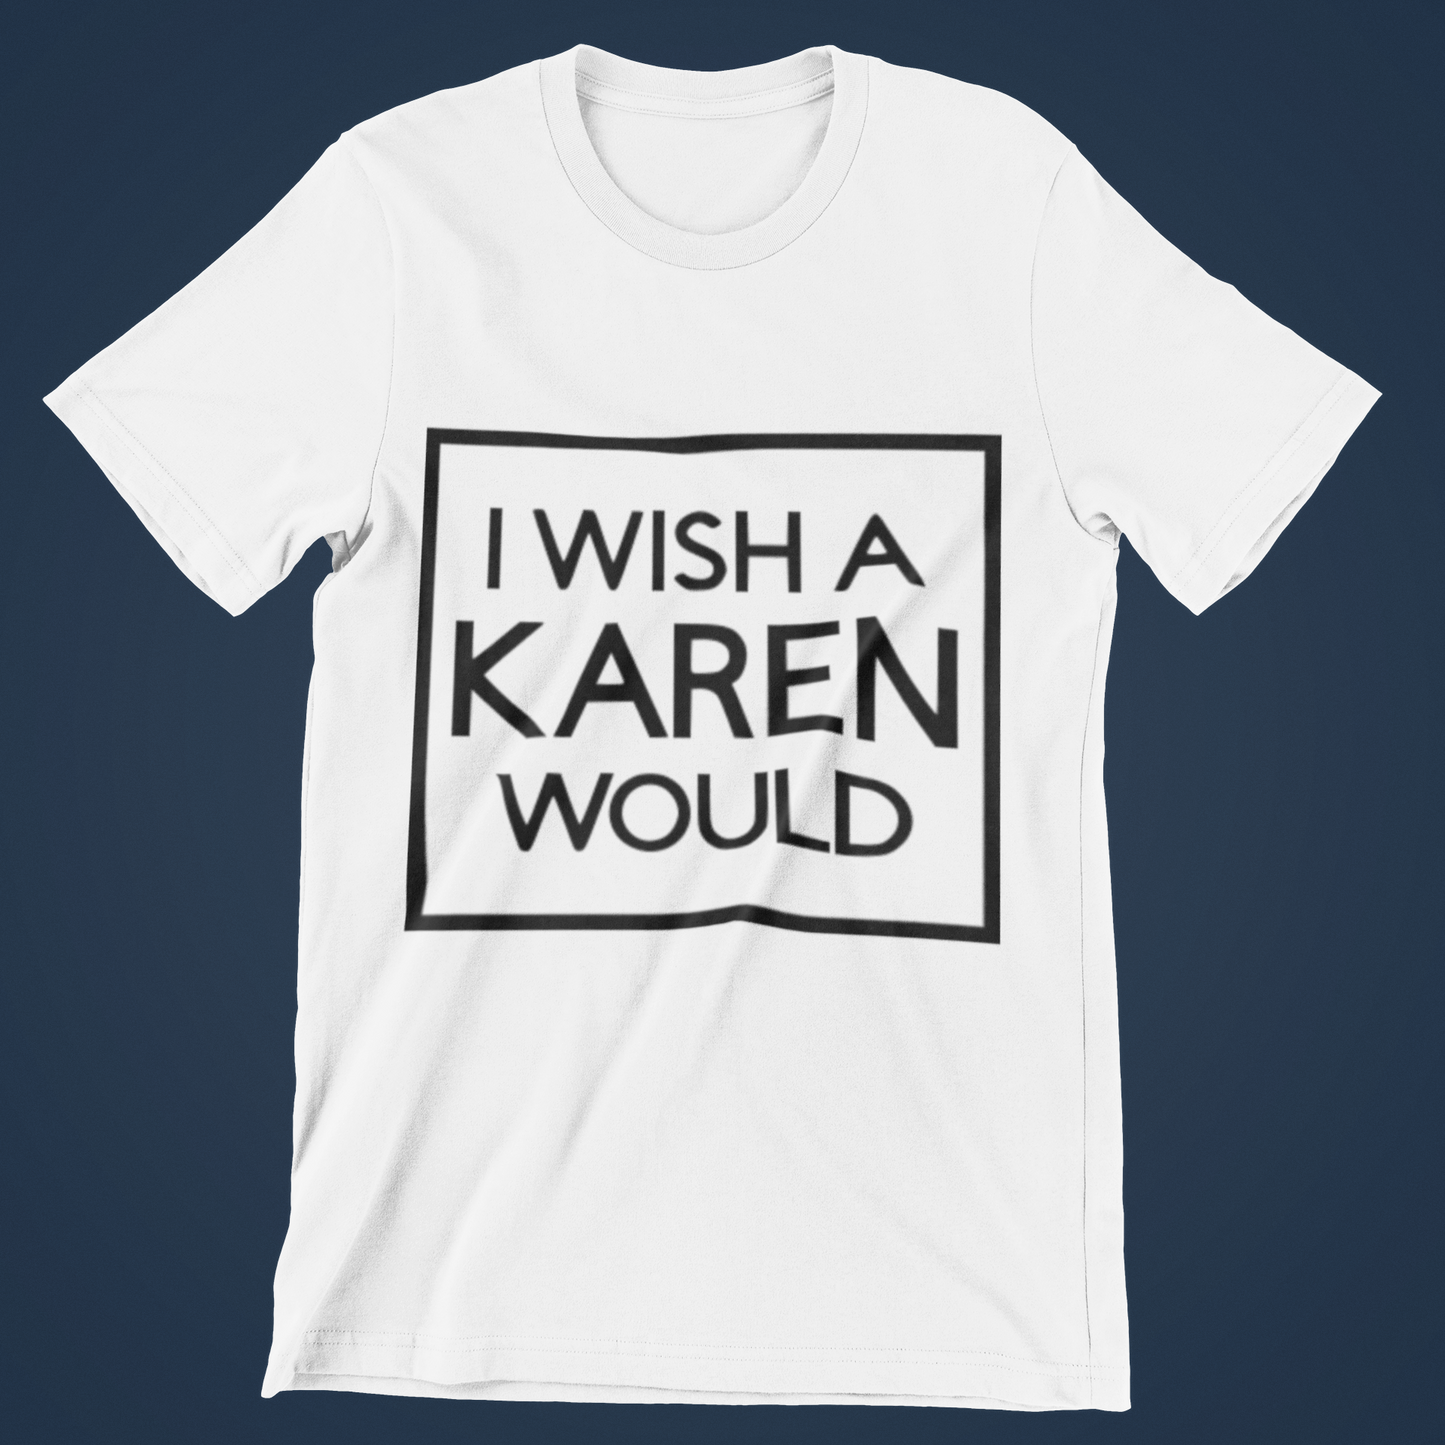 I Wish A Karen Would!